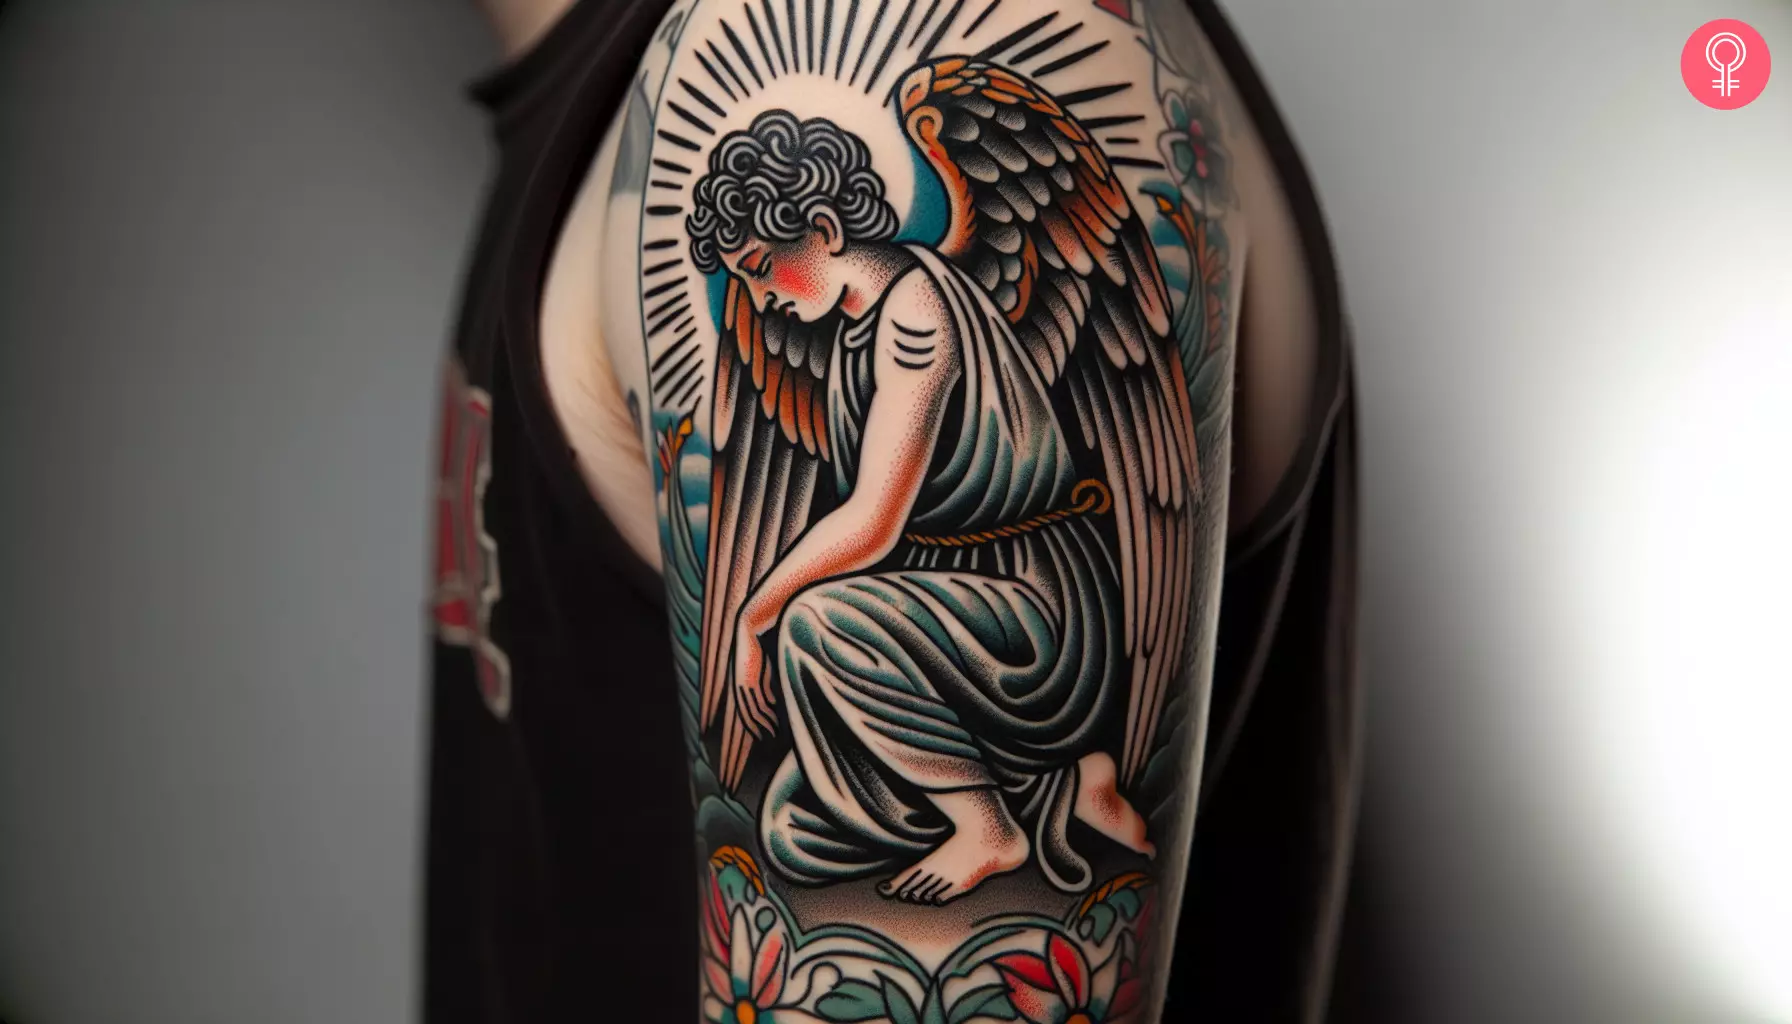 Fallen angel demon tattoo on the upper arm